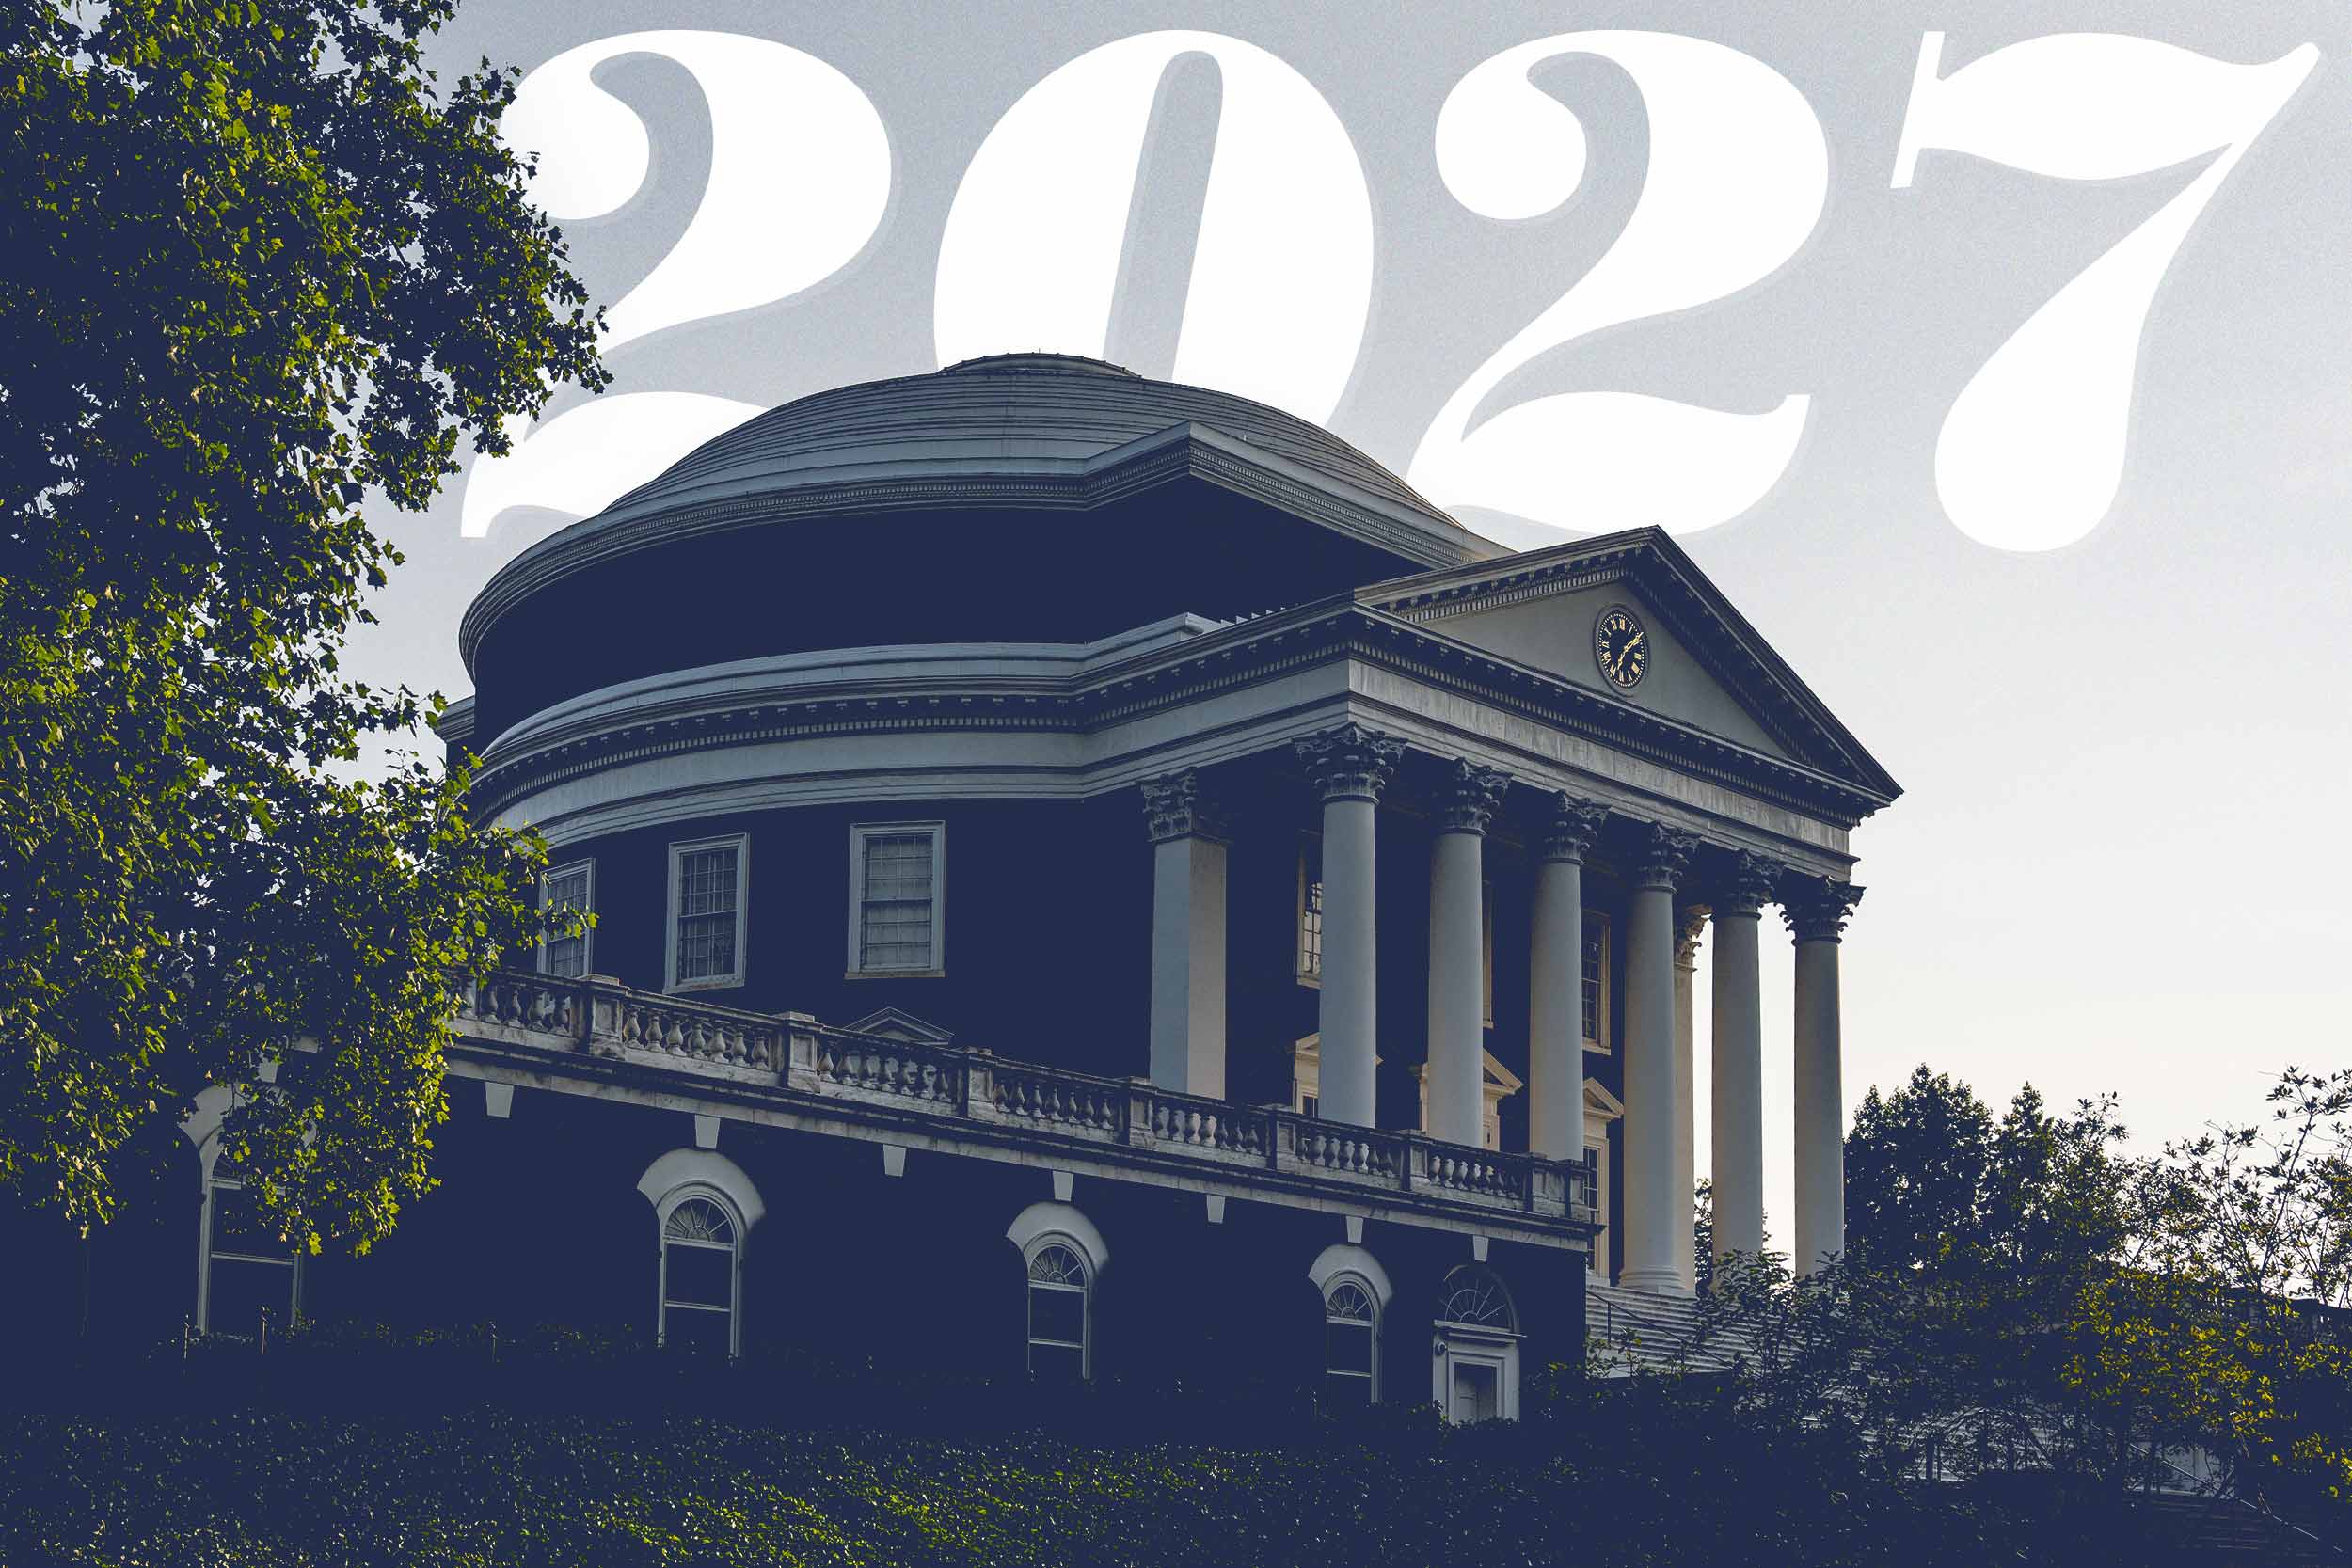 2027 behind the Rotunda